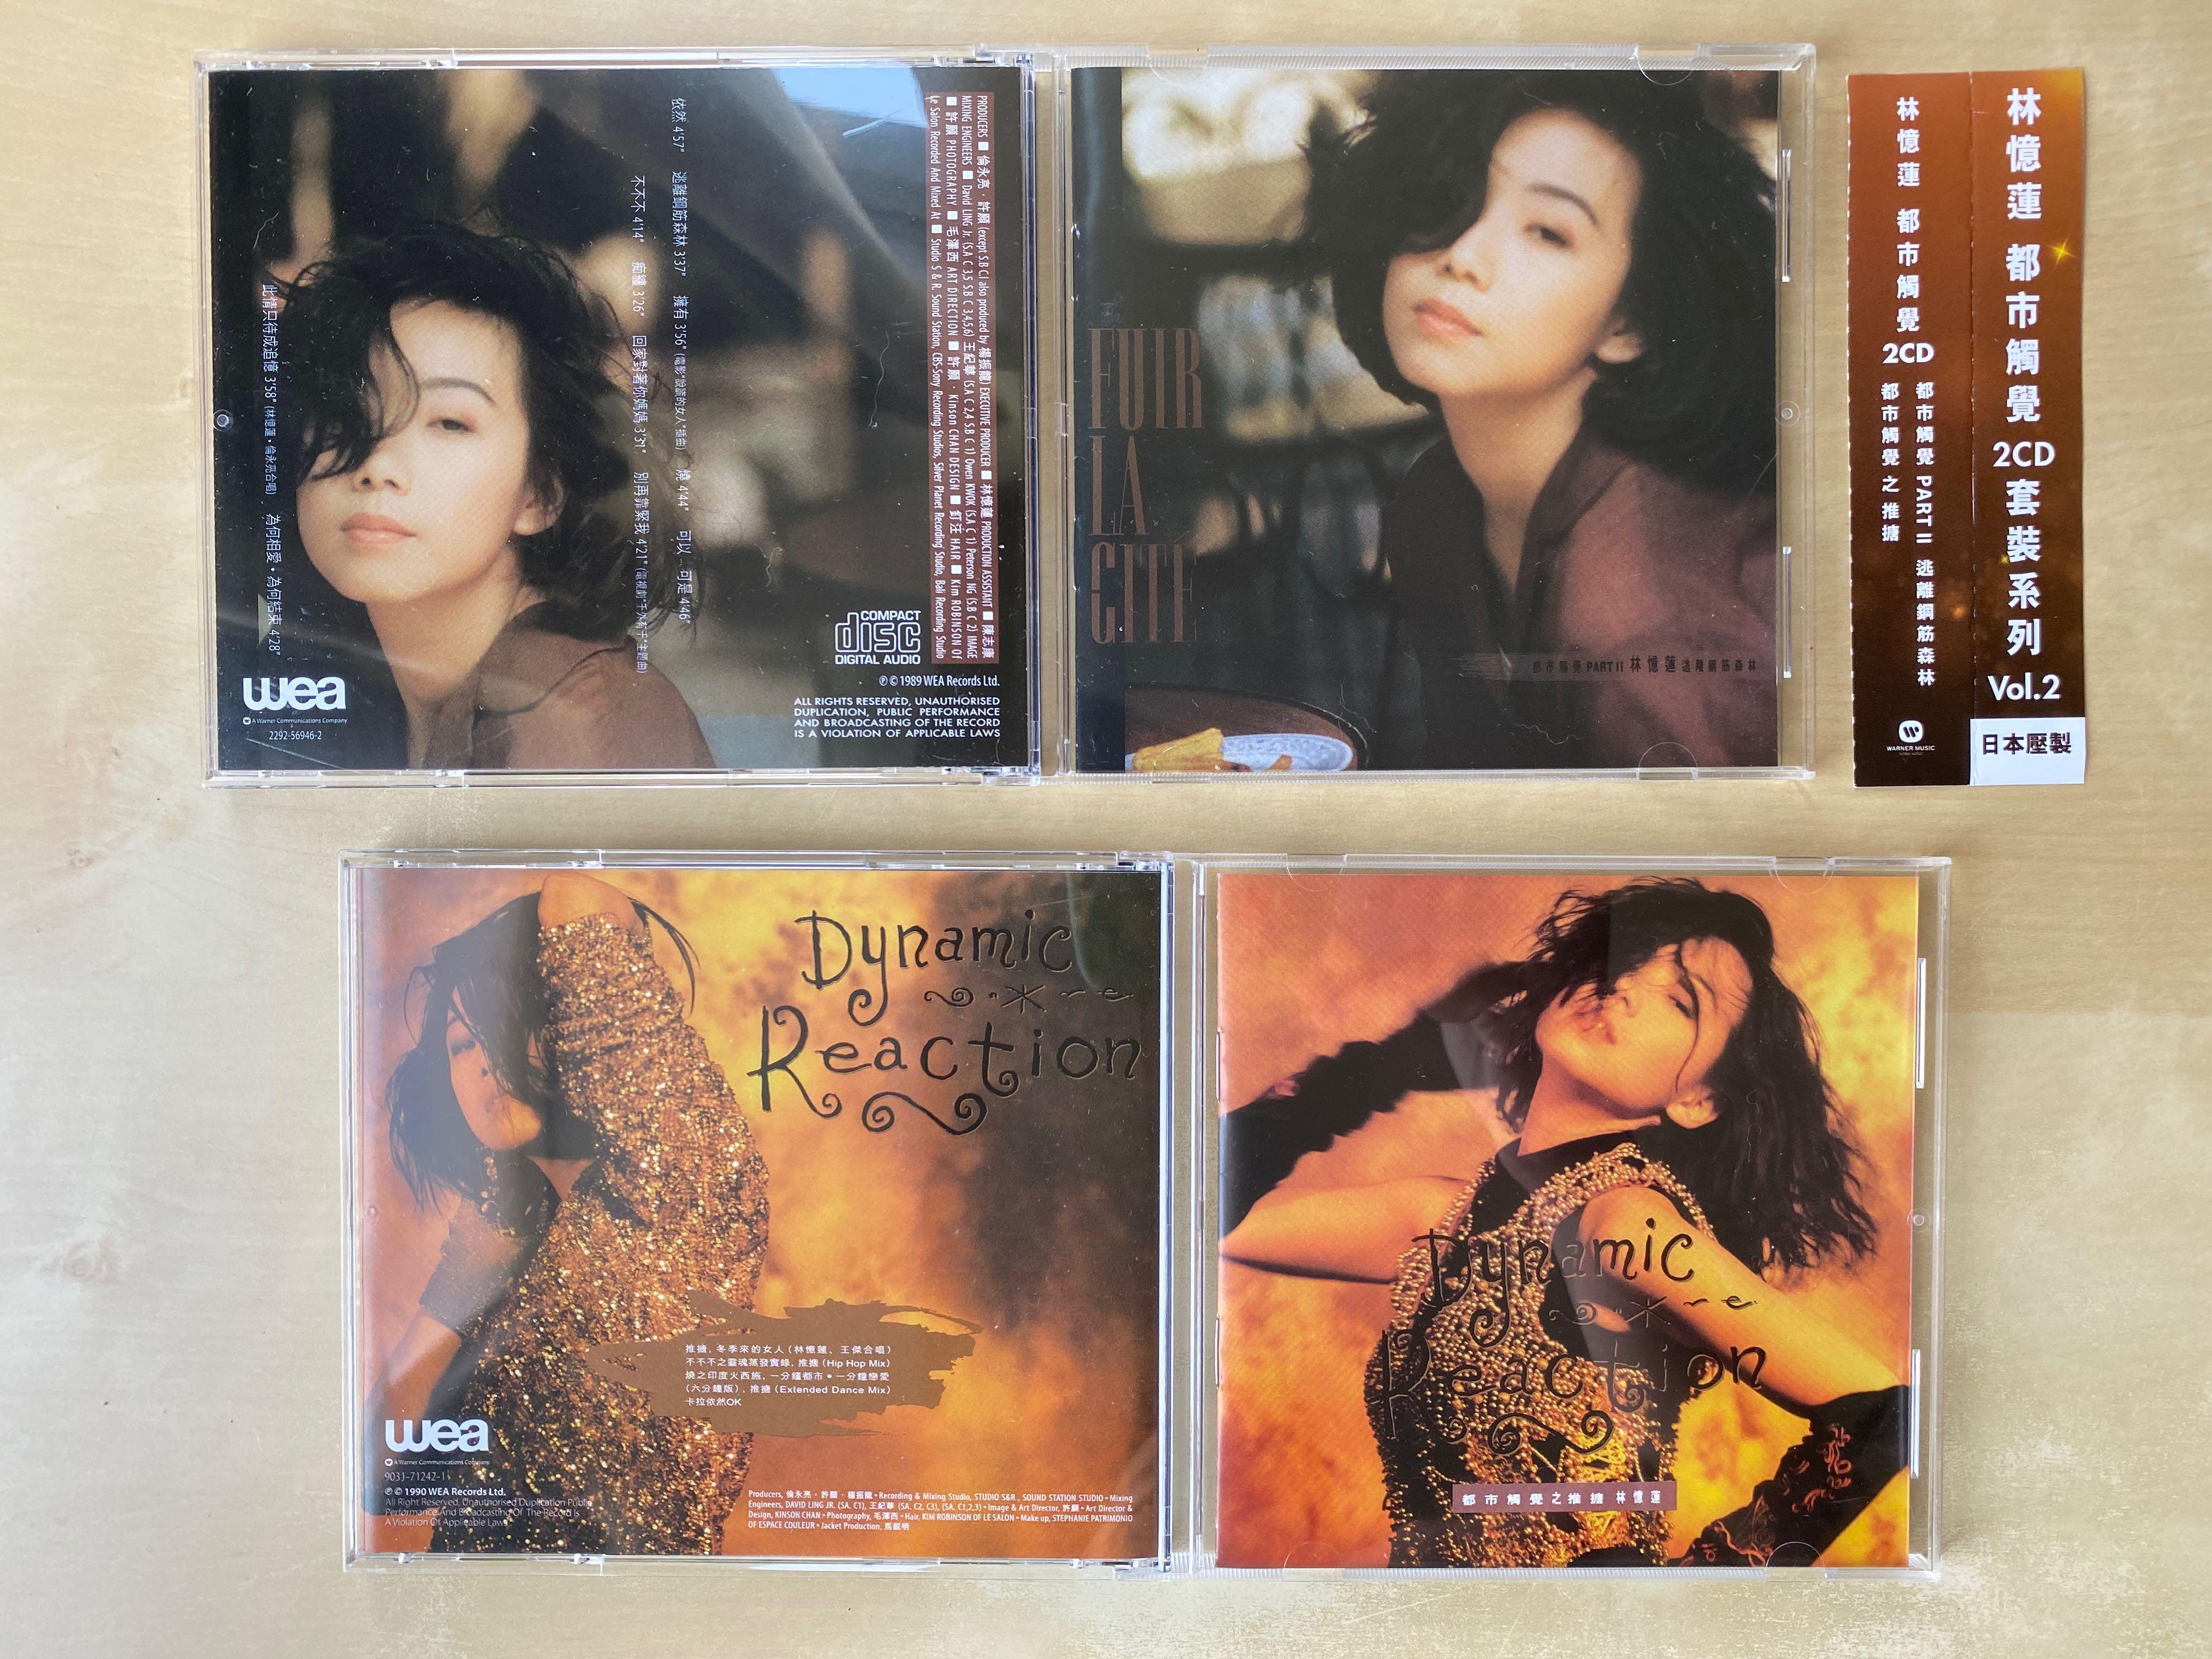 CD丨林憶蓮都市觸覺2CD 套裝系列Vol.2 / Sandy Lam City Rhythm 2 + 